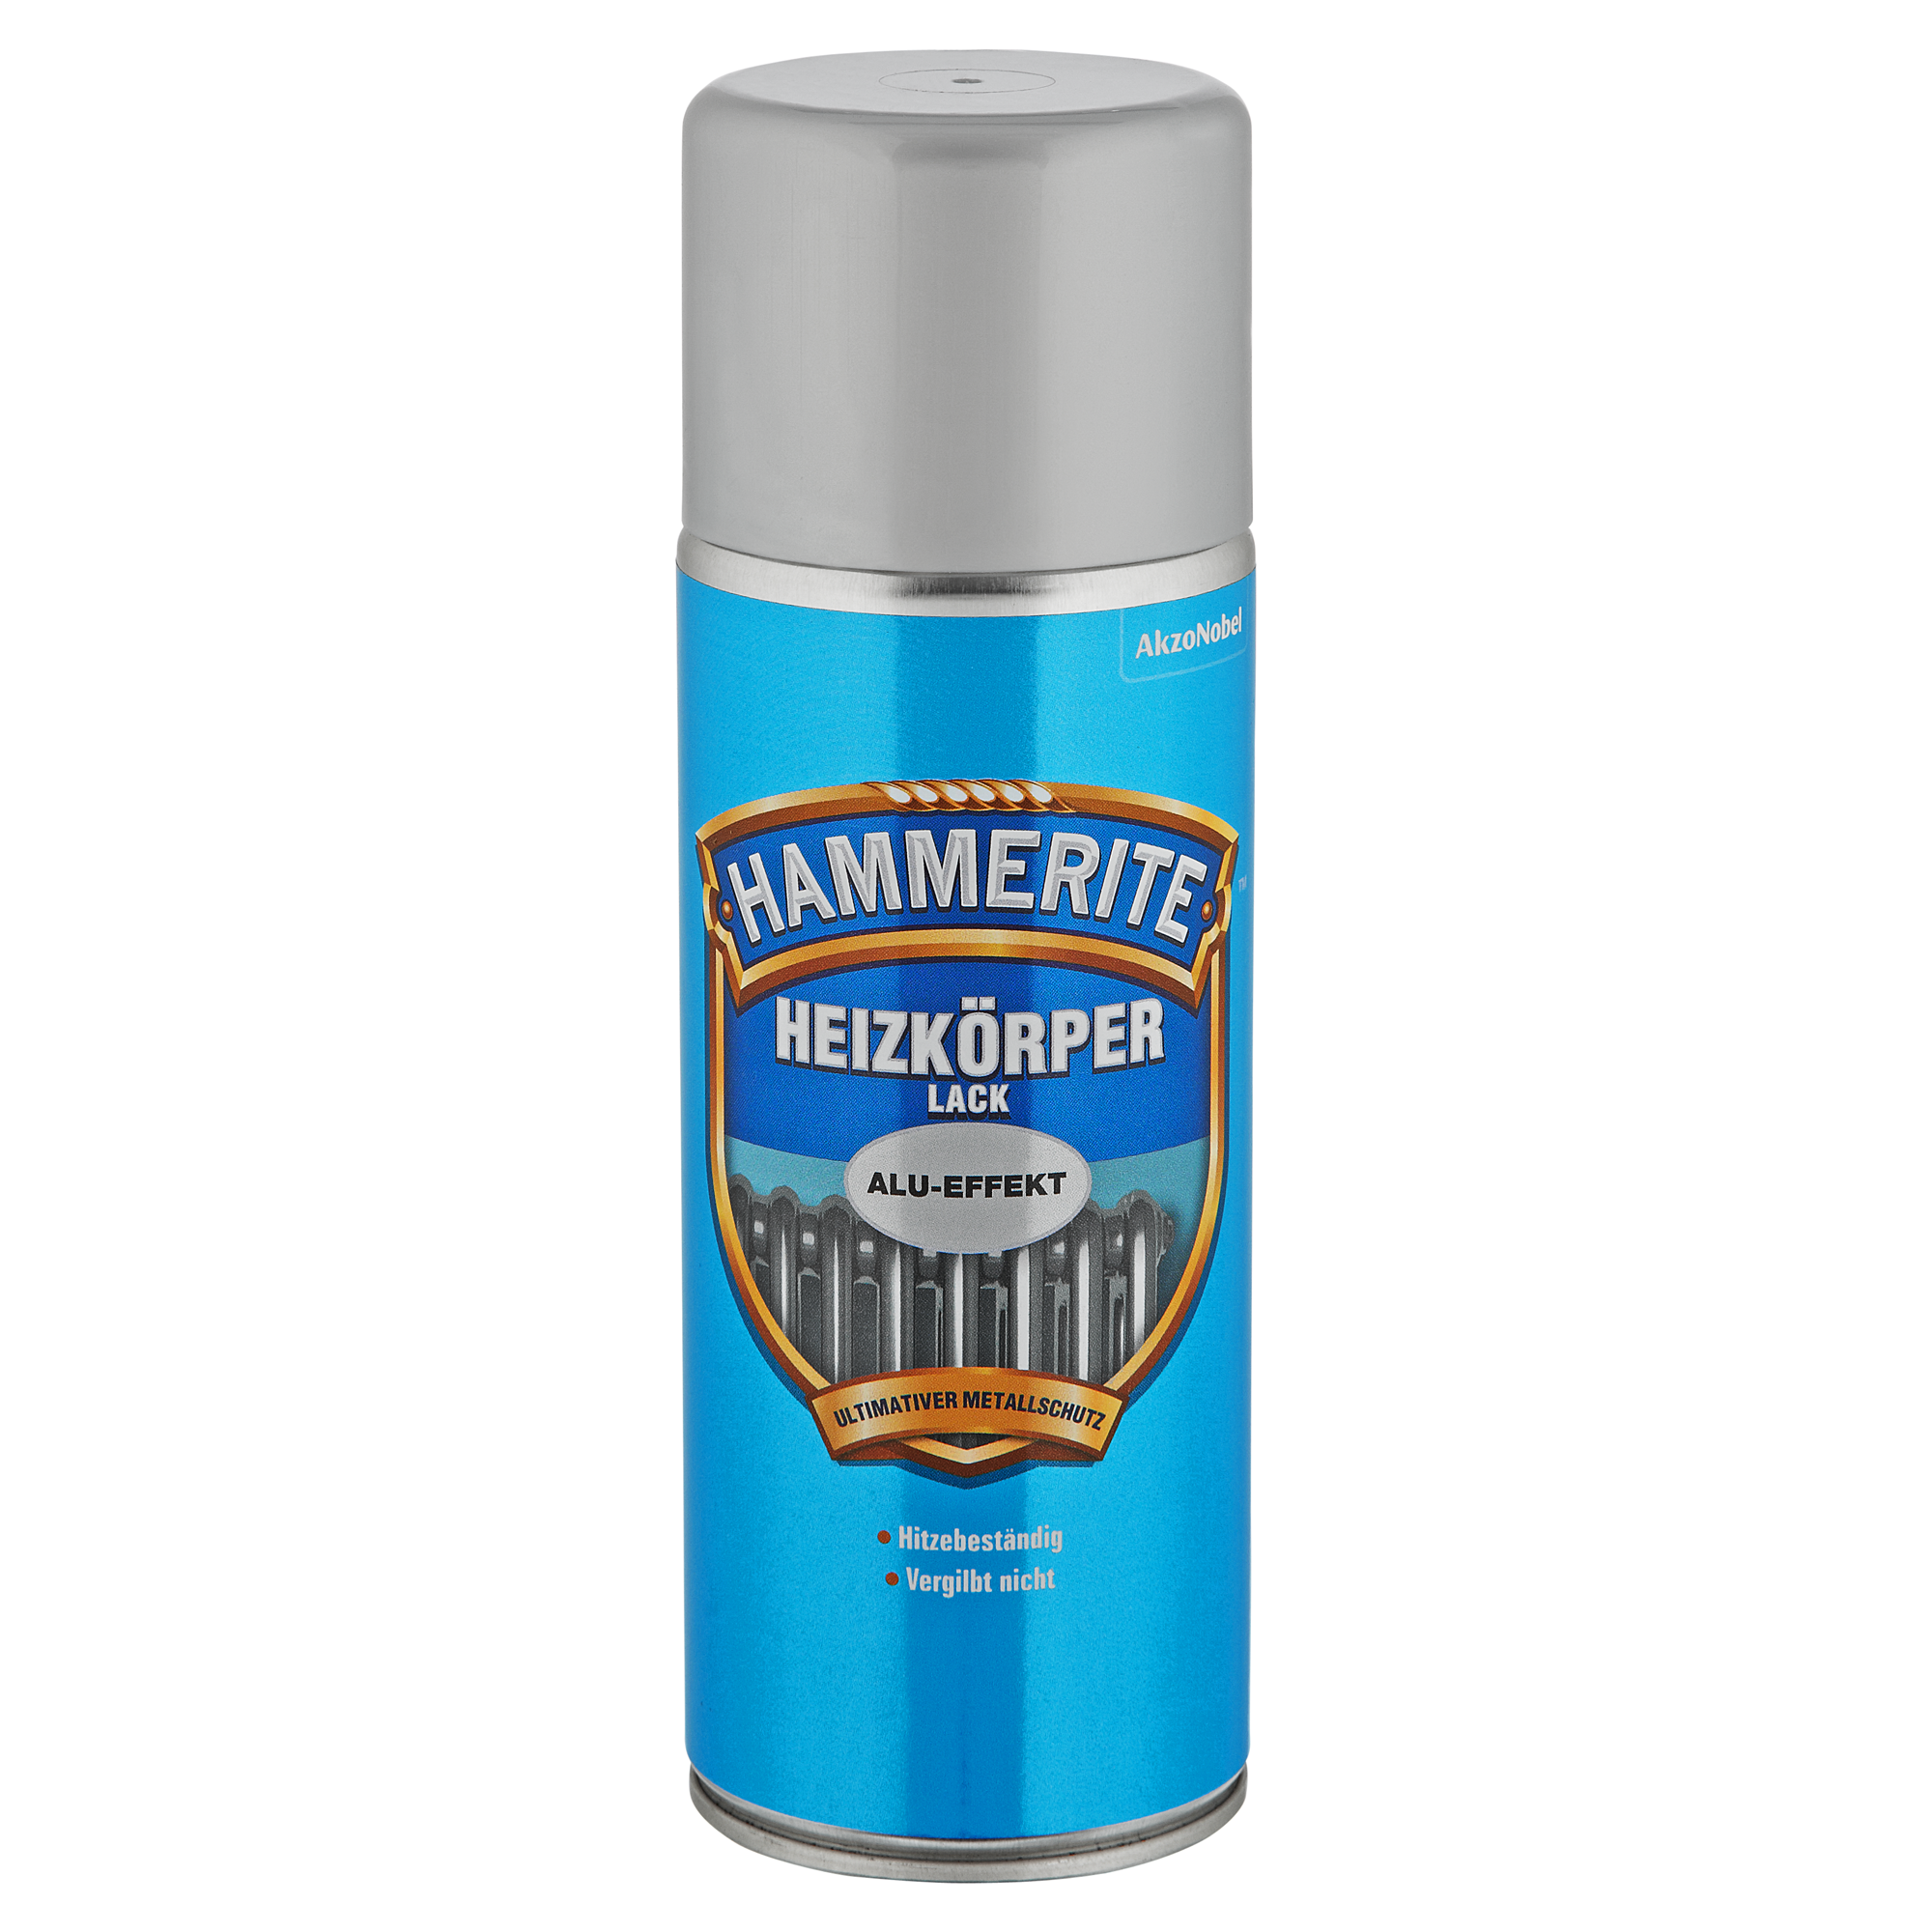 Heizkörperlack-Spray aluminiumfarben glänzend 400 ml + product picture